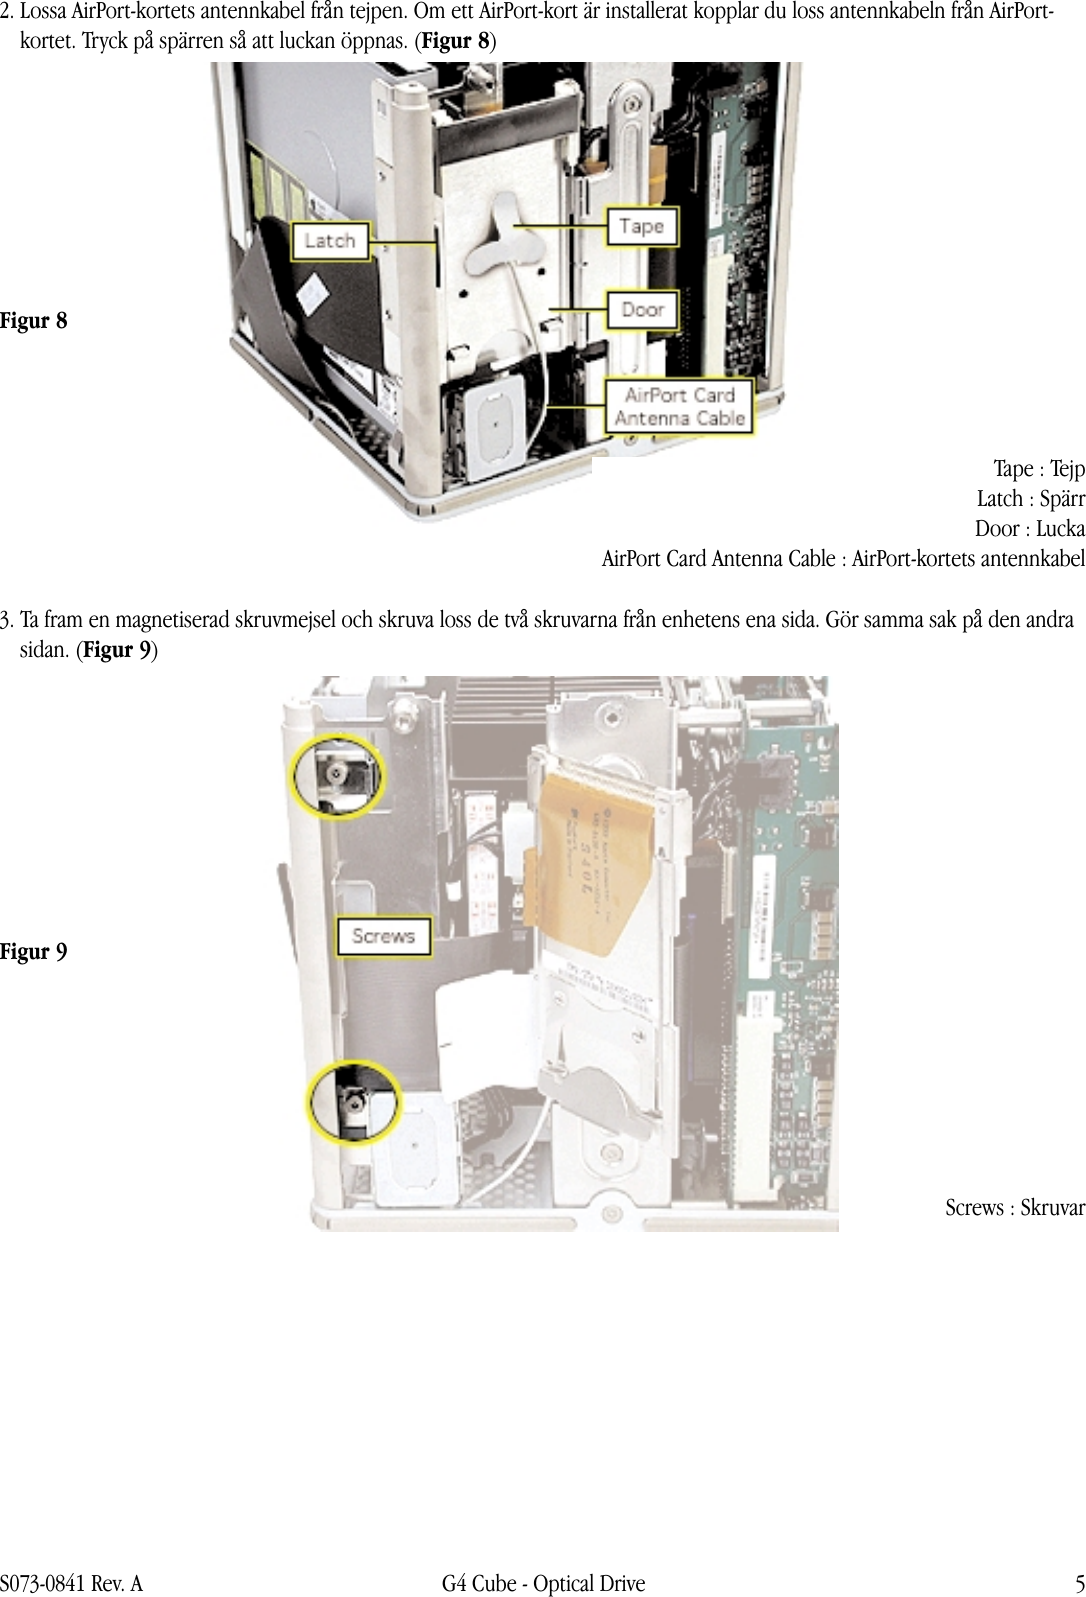 Page 5 of 12 - Apple Power Mac G4 (Cube) Optical Drive User Manual - Optisk Enhet Instruktioner För Byte 073-0841-a